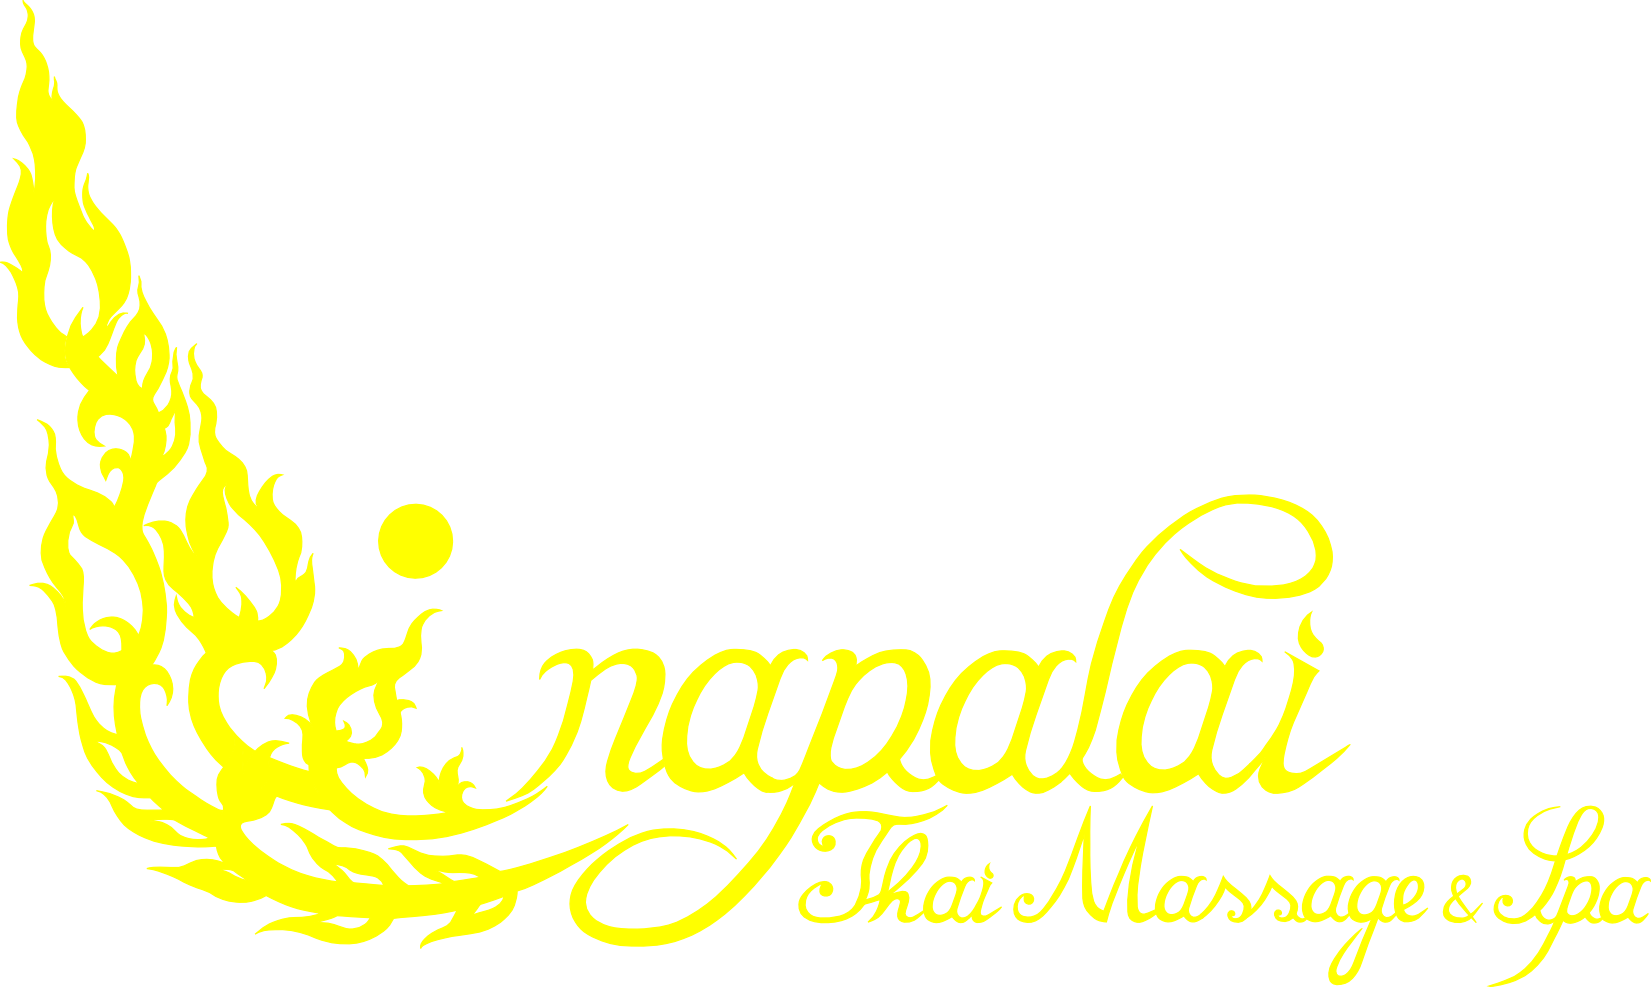 Logo Napalai Thai
Massage & Spa